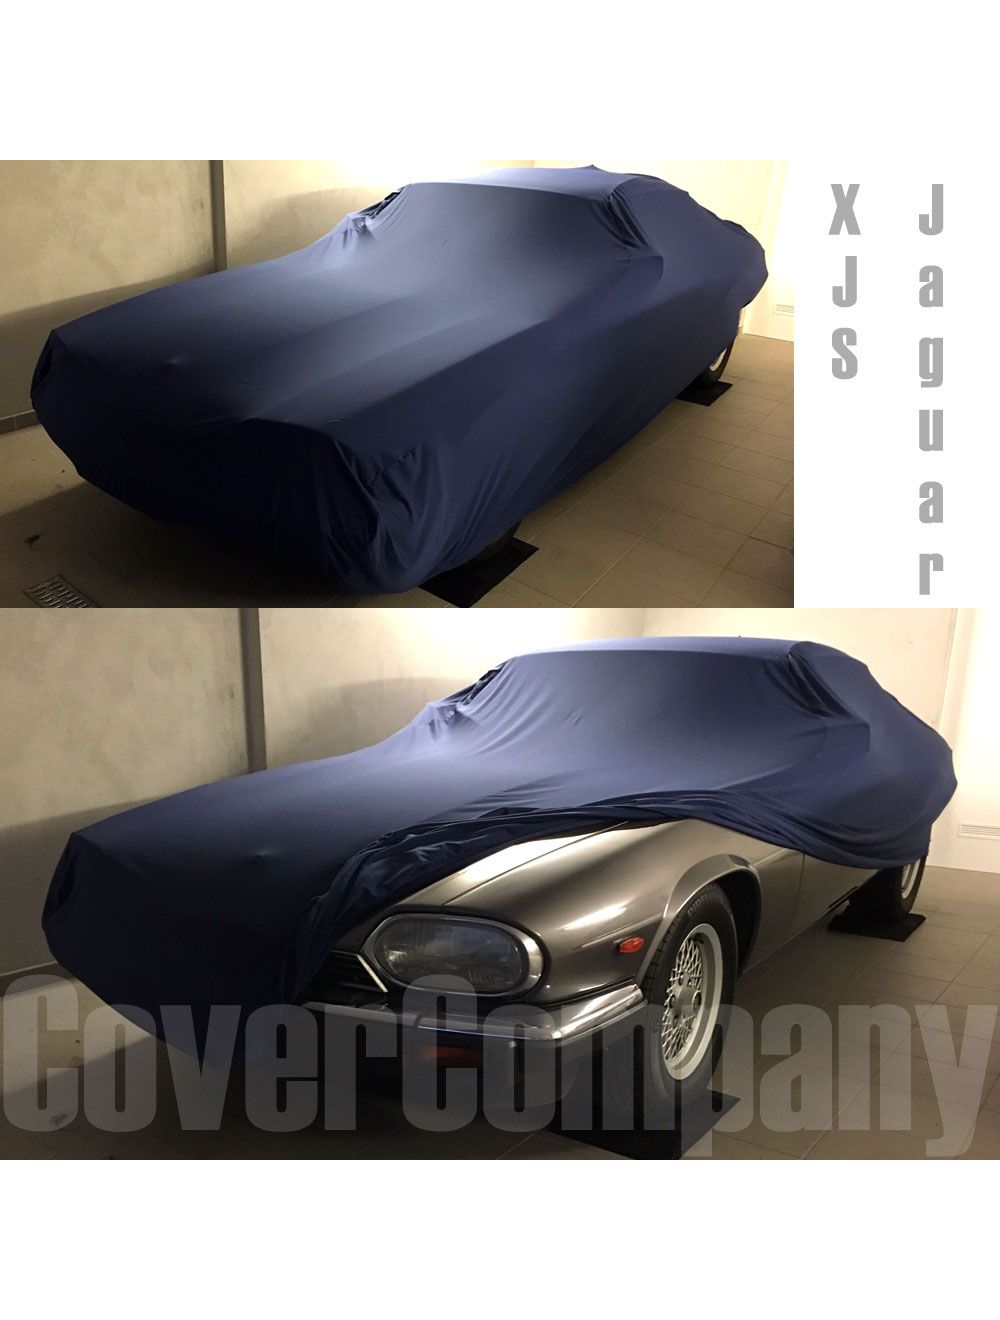 Standard Fit Jaguar Car Cover - Indoor Bronze Range